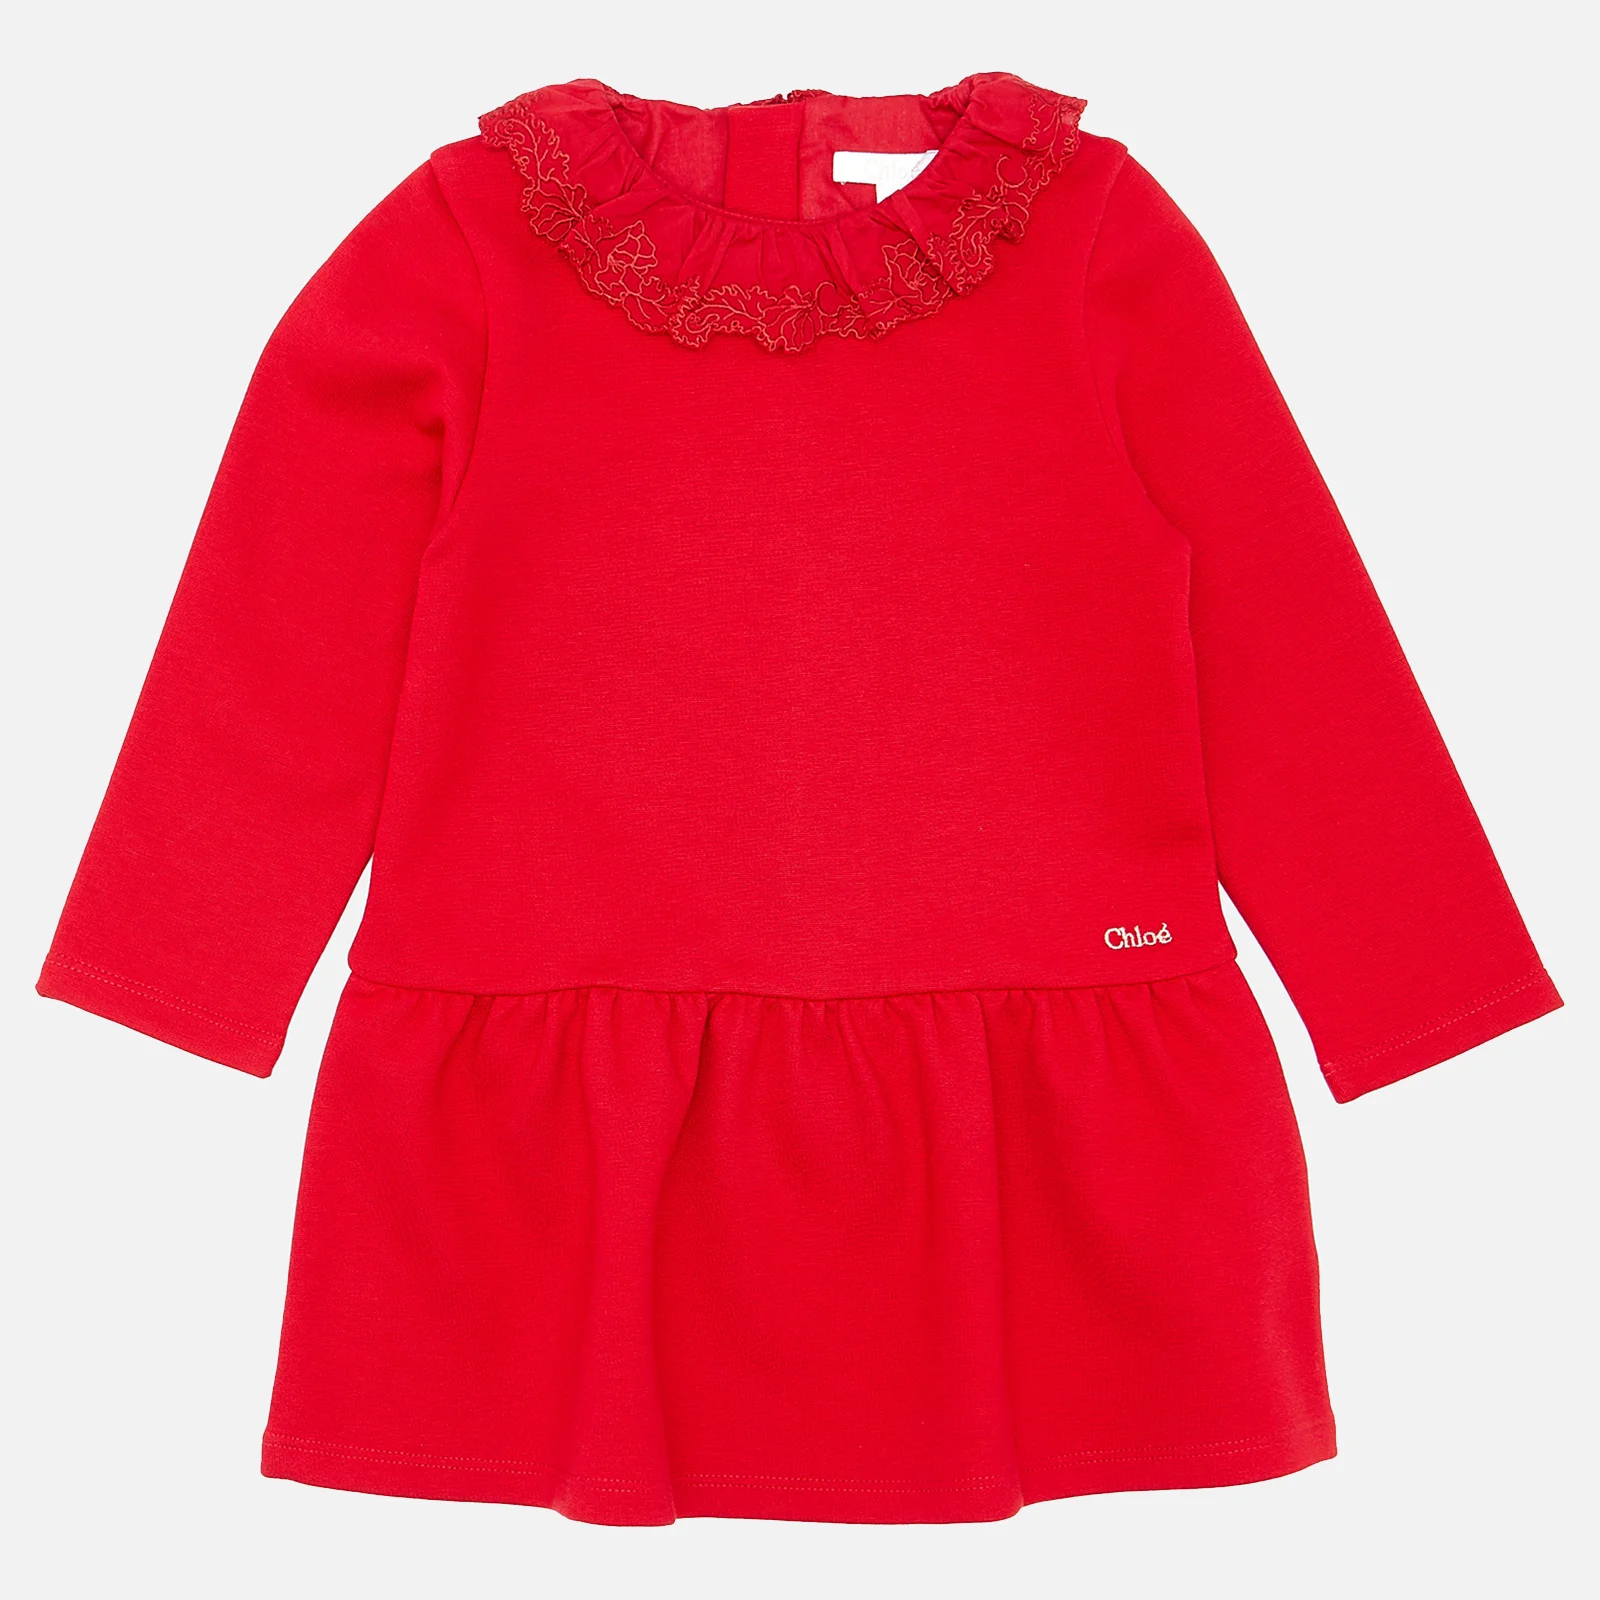 Chloé Girls' Frill Collar Dress - Crimson Image 1